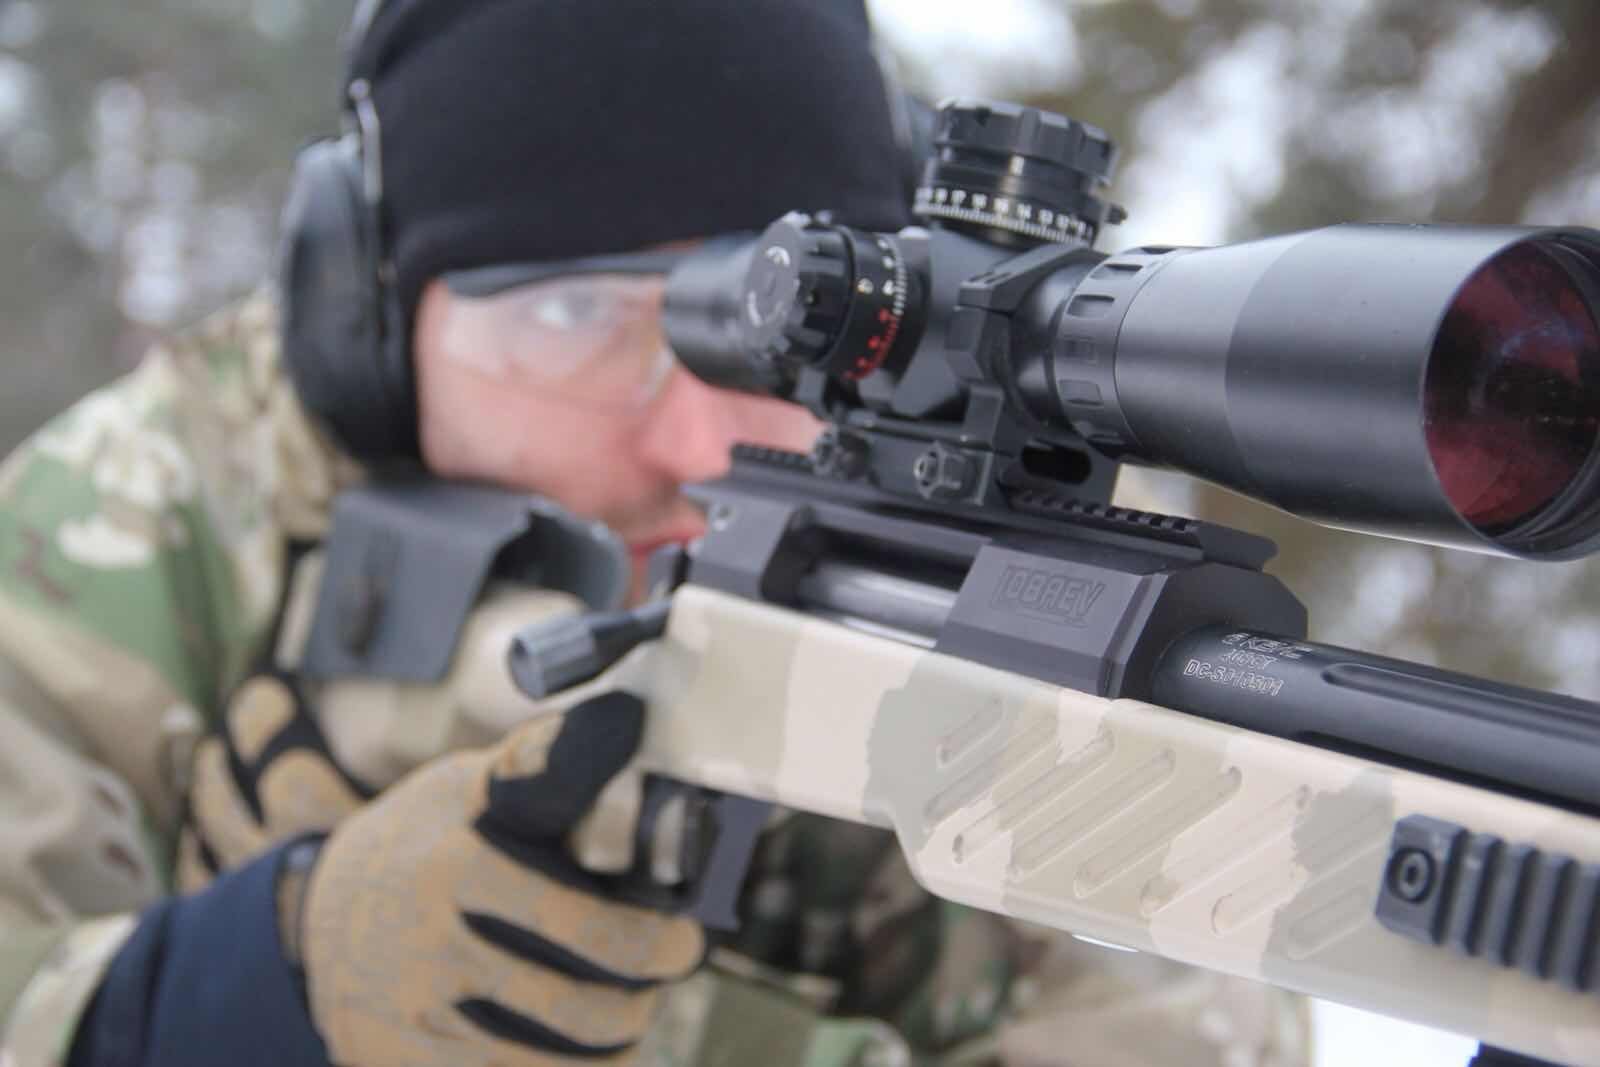 LobaevArms, Sniper rifle Wallpaper